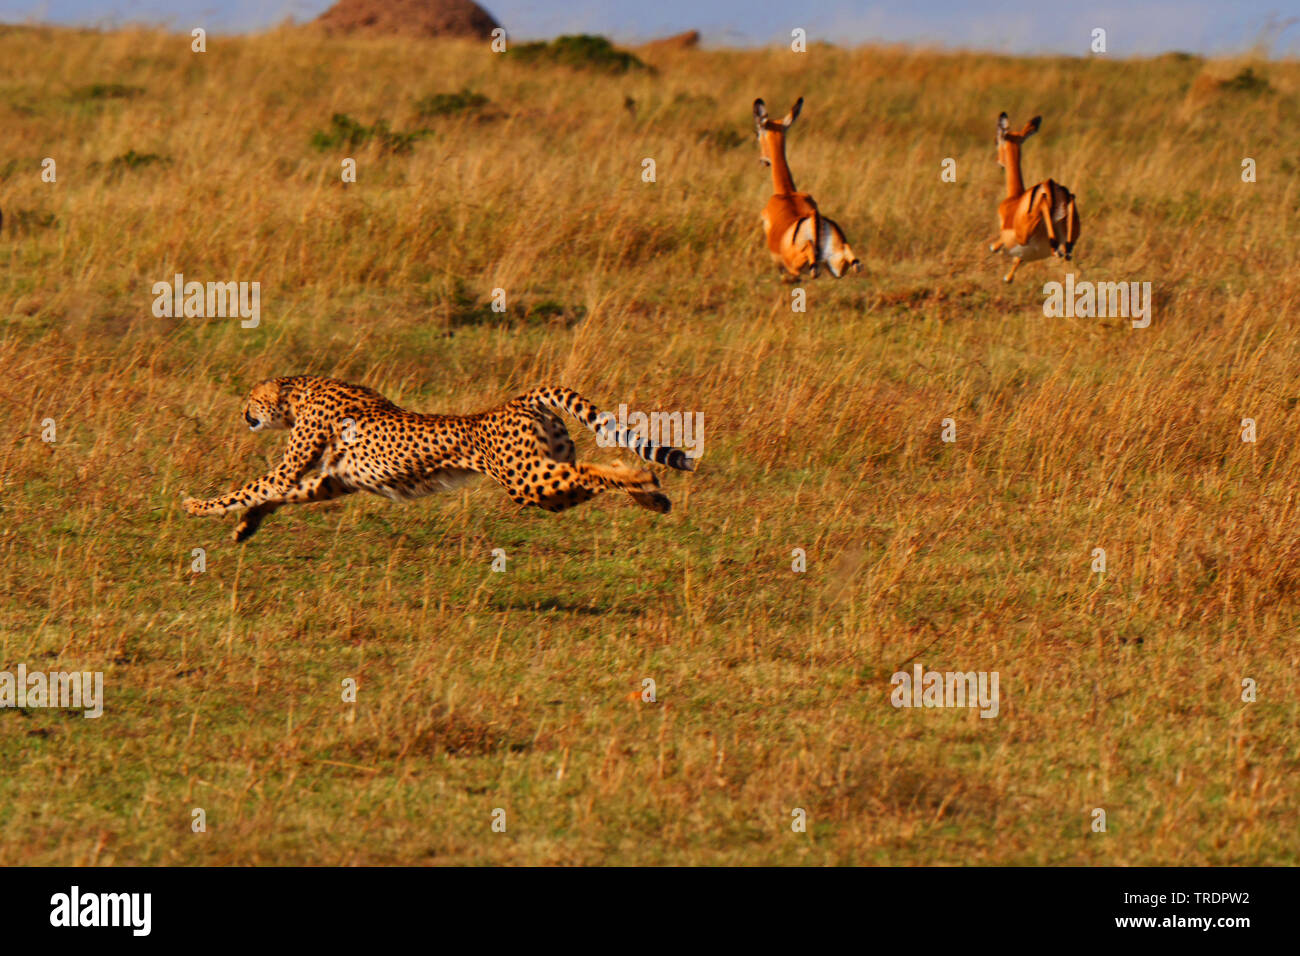 cheetah (Acinonyx jubatus), hunting cheetah, fleeing antelopes in the background, Kenya, Masai Mara National Park Stock Photo